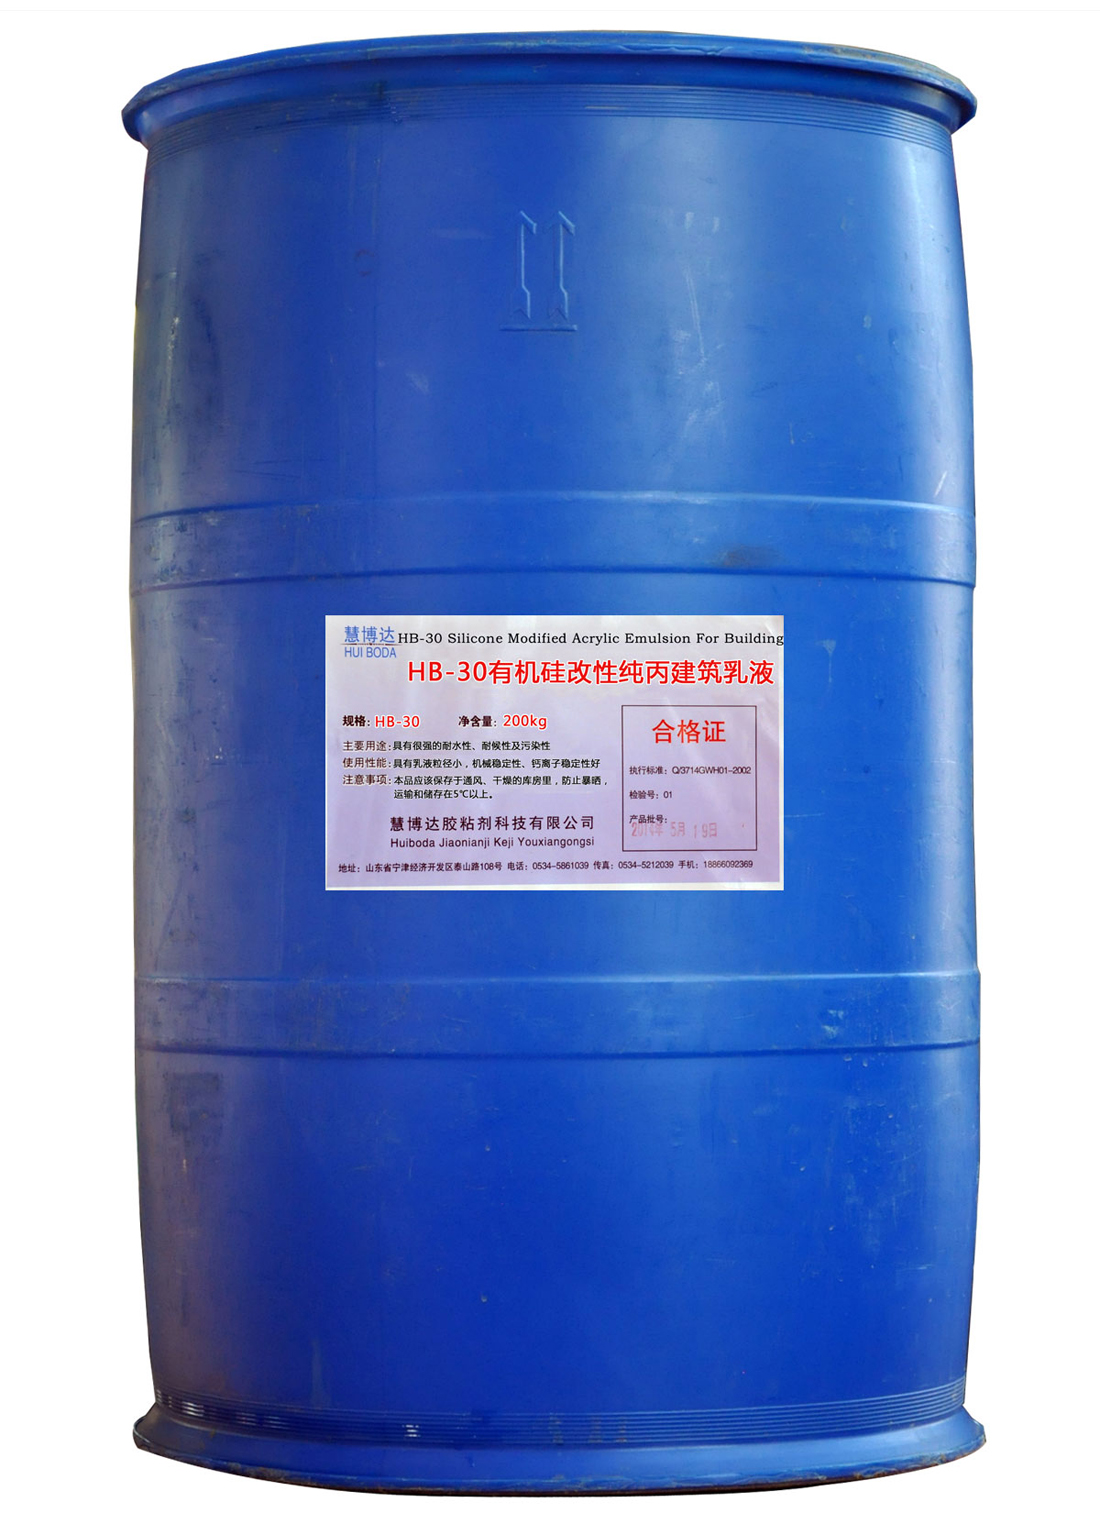 HB-30有�C硅改性�丙建筑苯丙乳液（200kg）